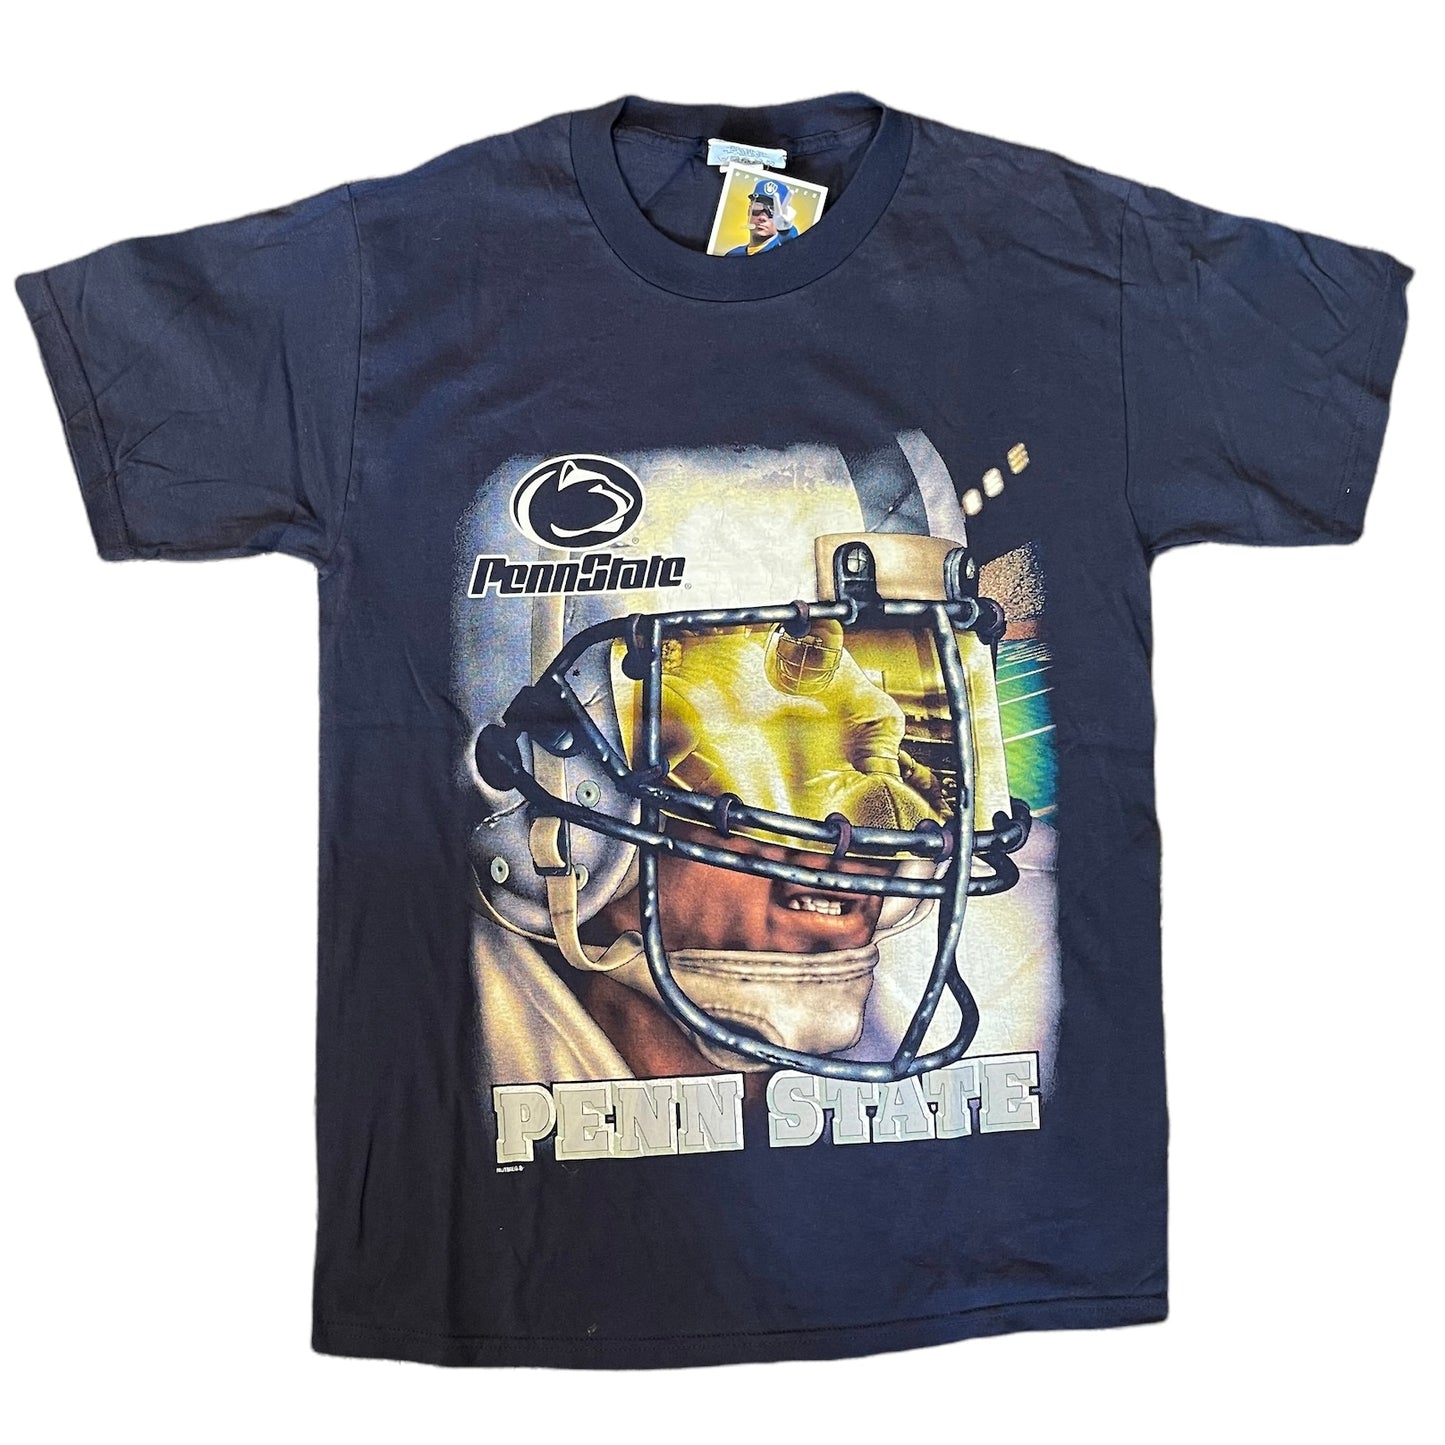 Vintage 1990s Penn State Football Shirt